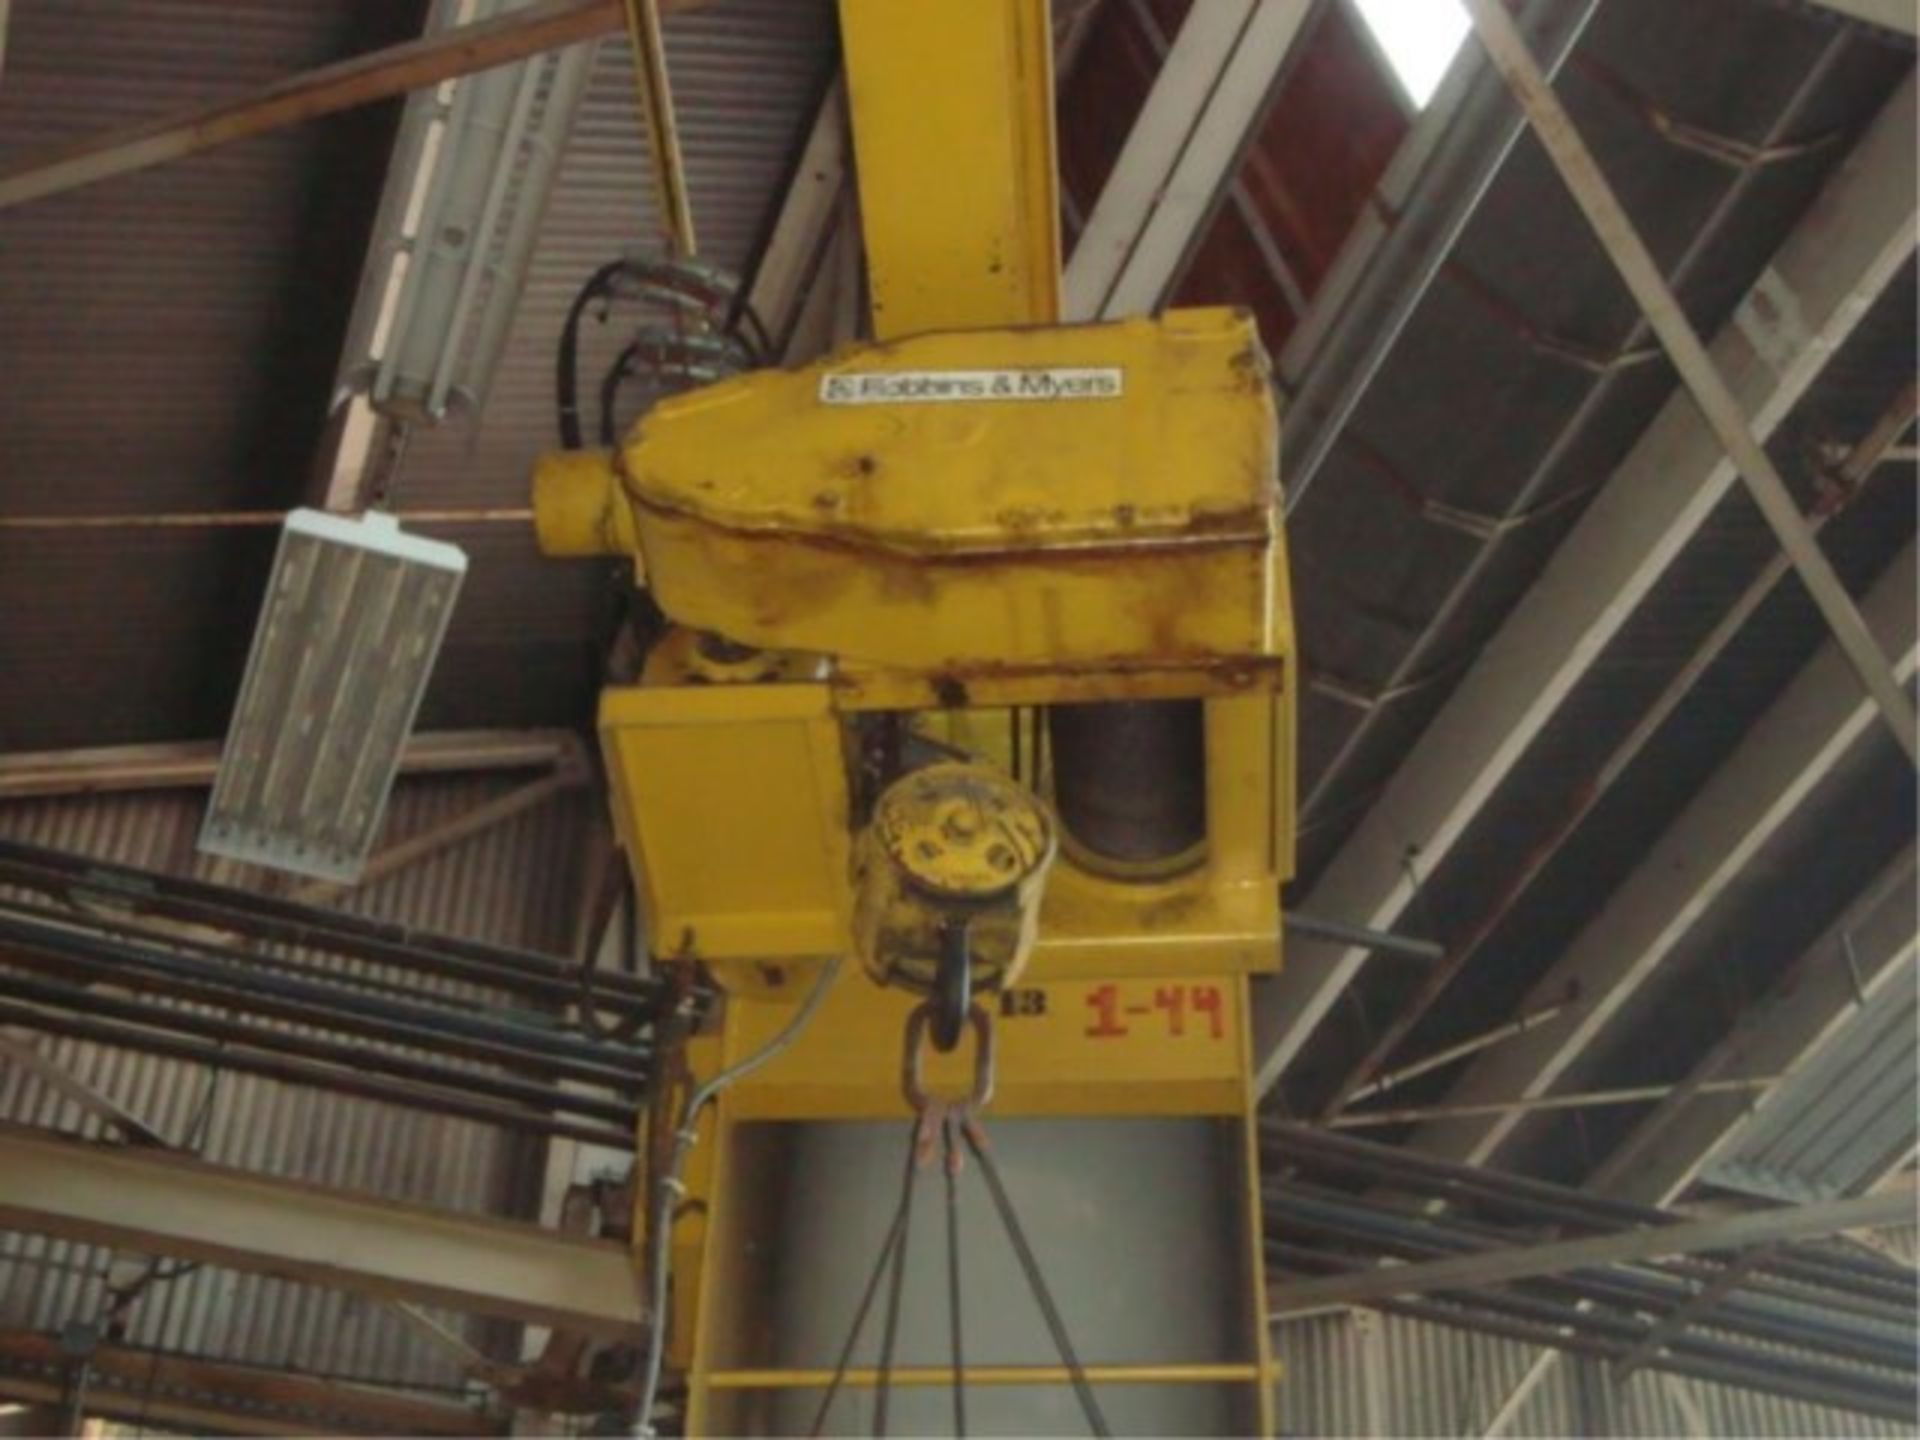 5-Ton Capacity Swivel Jib Crane W/Cable Hoist - Image 2 of 4